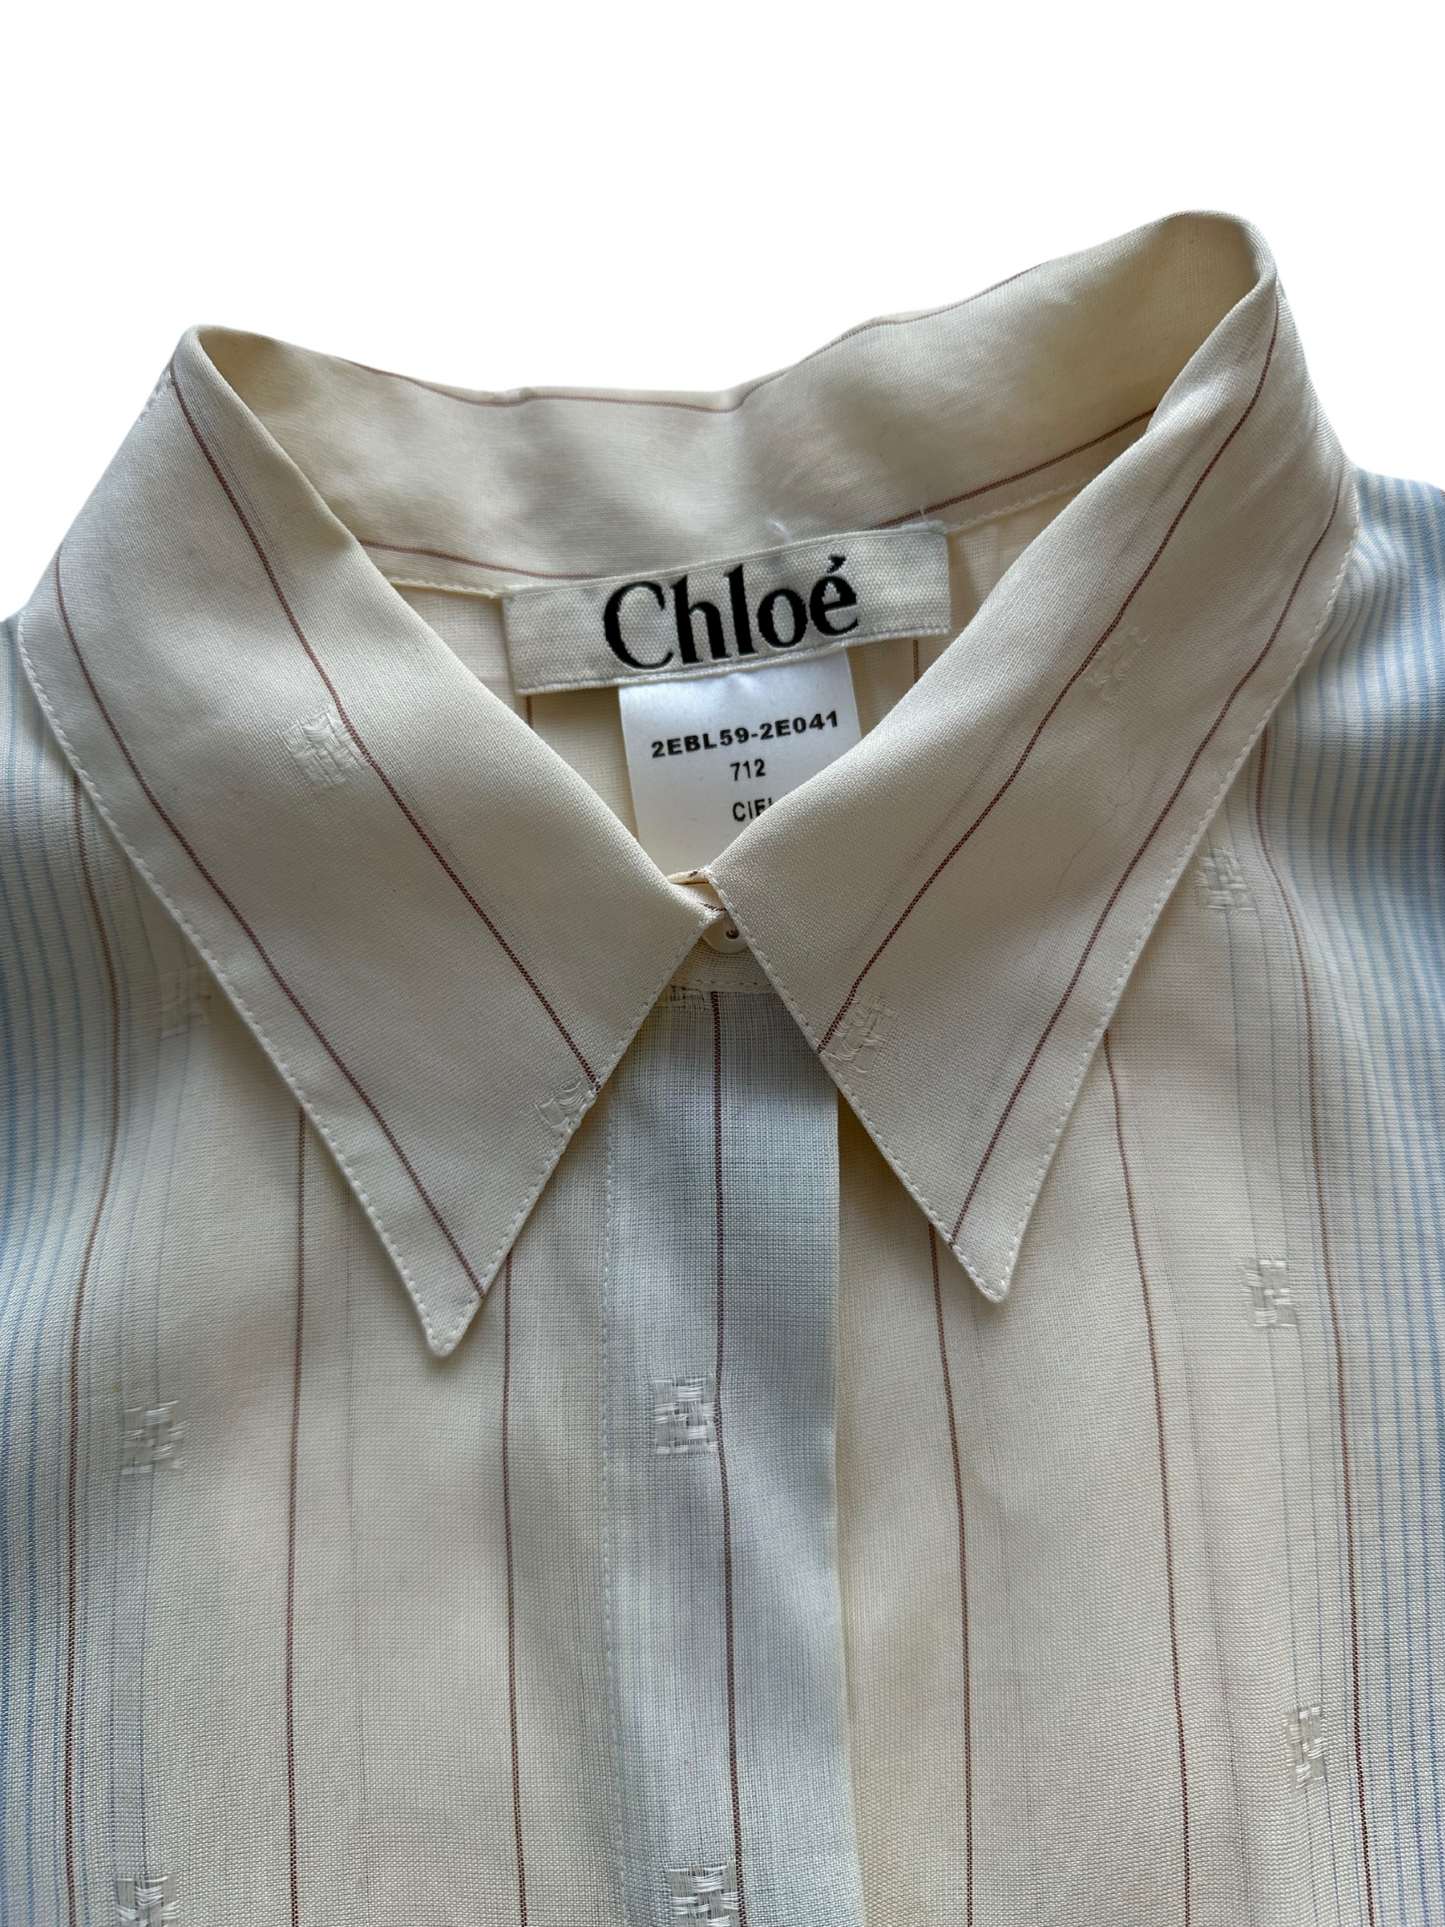 Chloe 2002 Phoebe Philo cut out striped shirt F 42 (US 6-8)